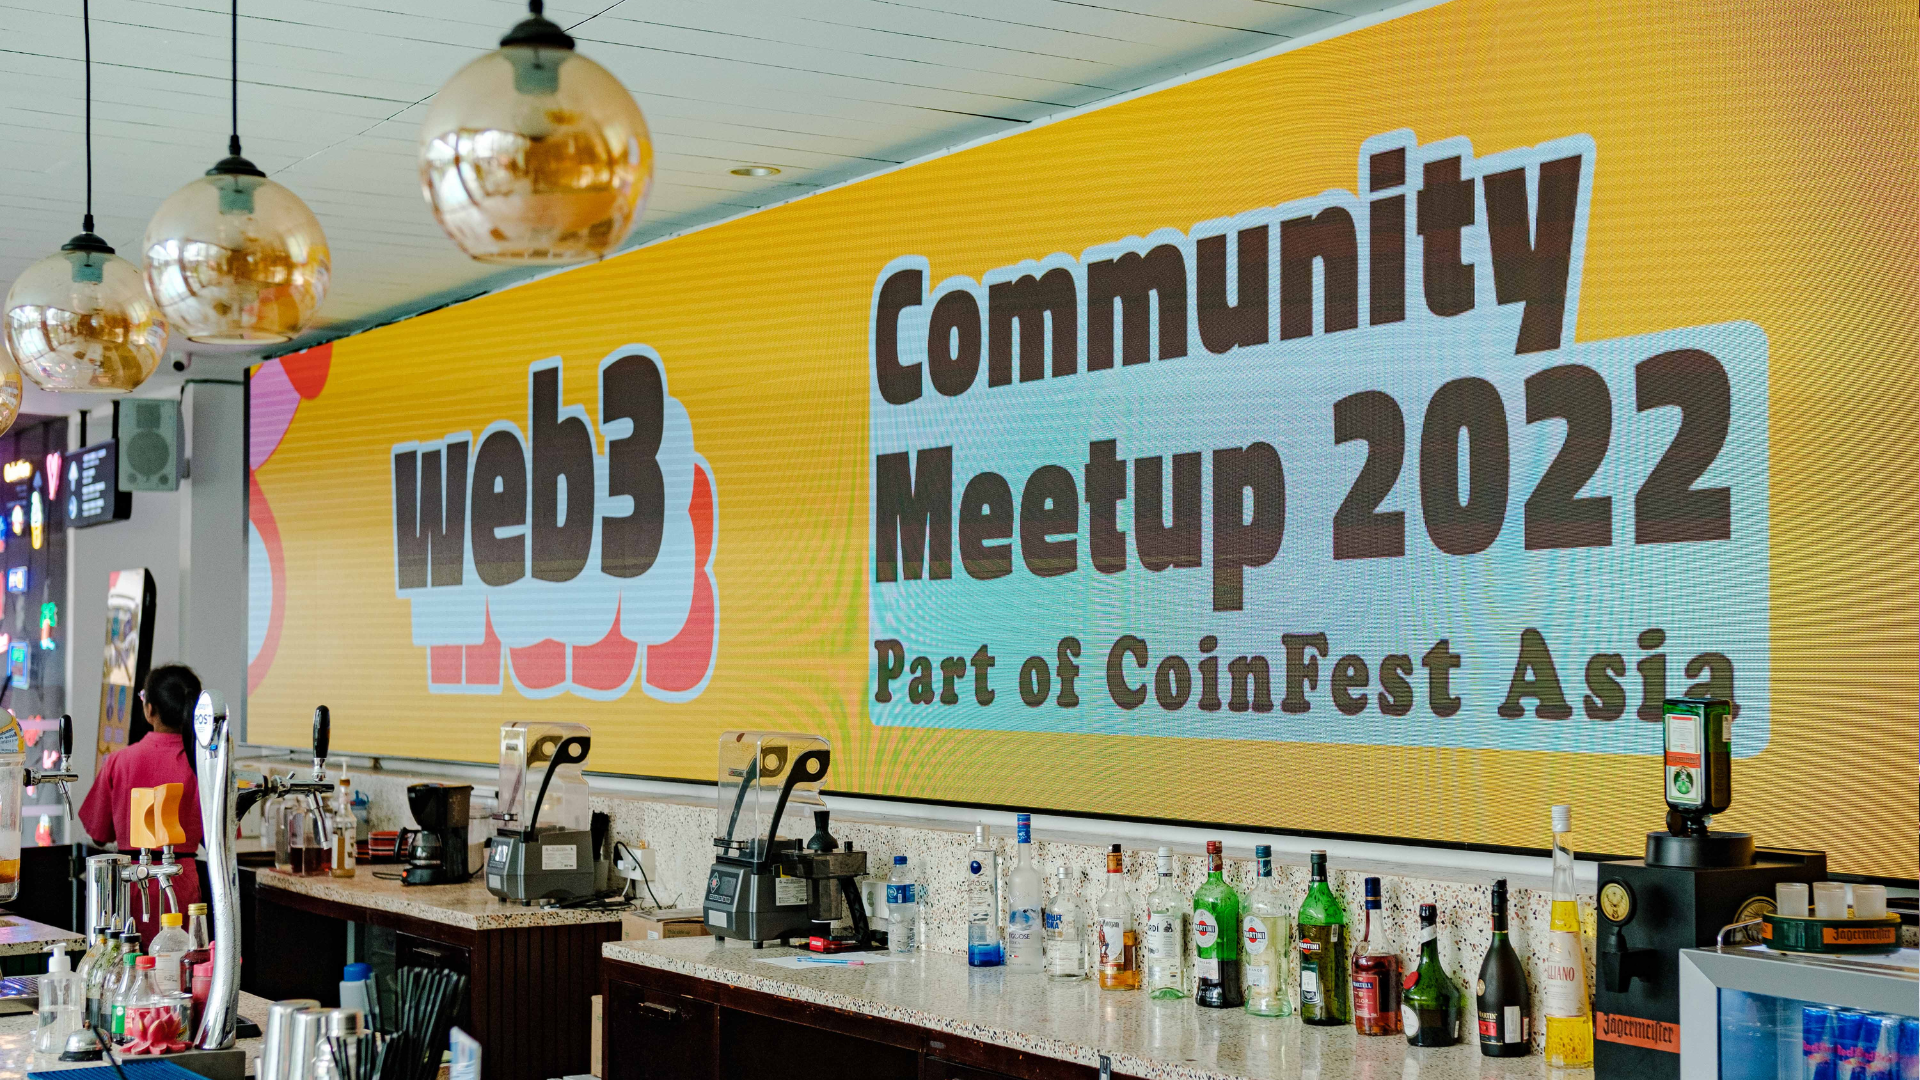 Acara "Web3 Community Meetup 2022" di T-Hub by Tokocrypto Bali pada 26 Agustus 2022. Foto: Tokocrypto.